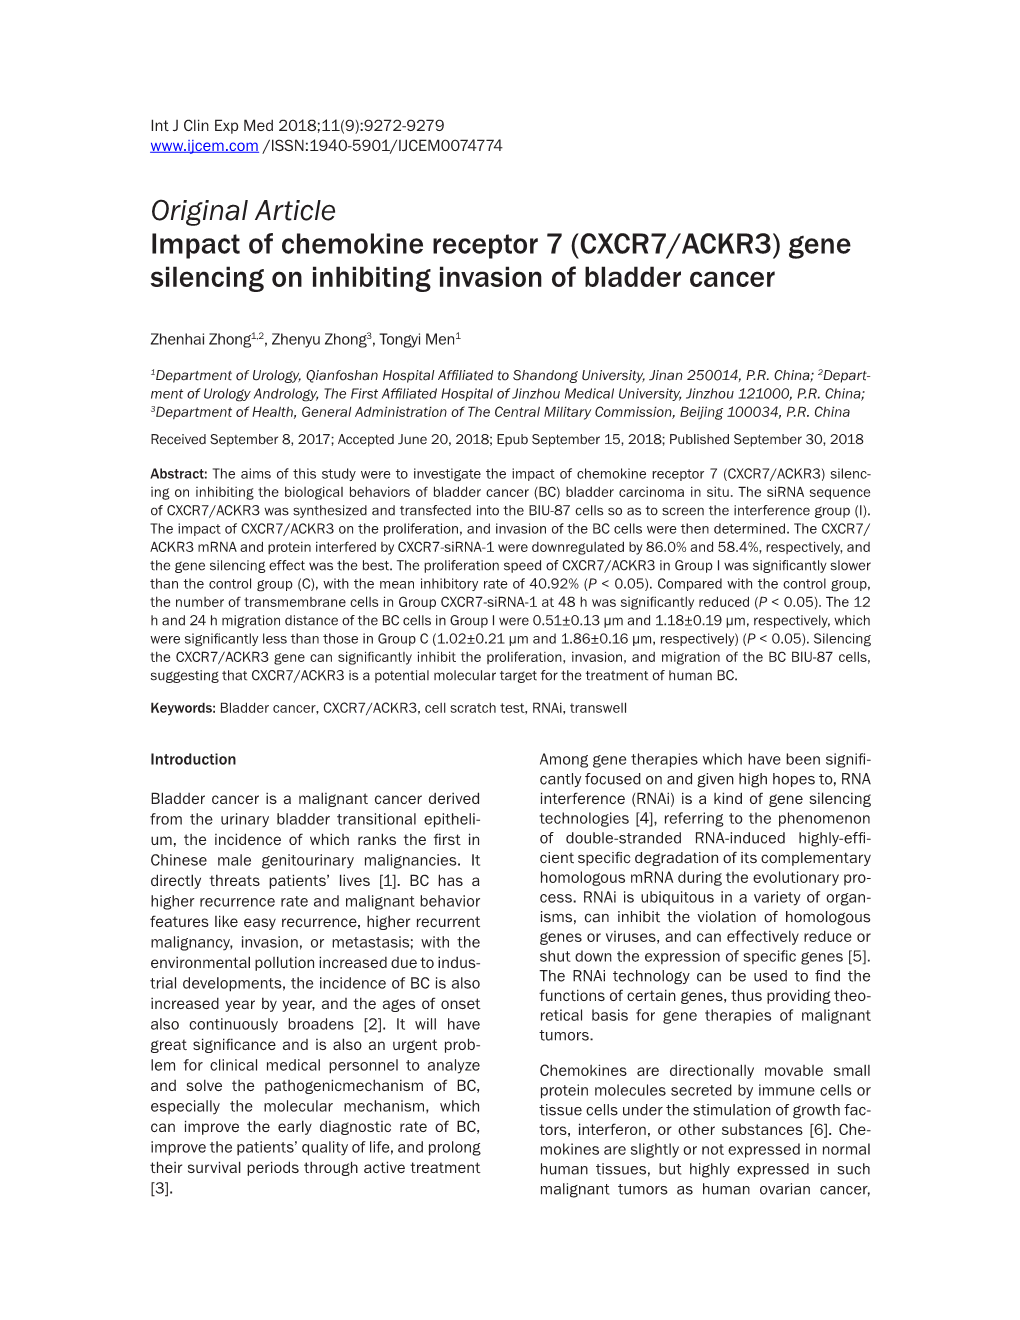 CXCR7/ACKR3) Gene Silencing on Inhibiting Invasion of Bladder Cancer